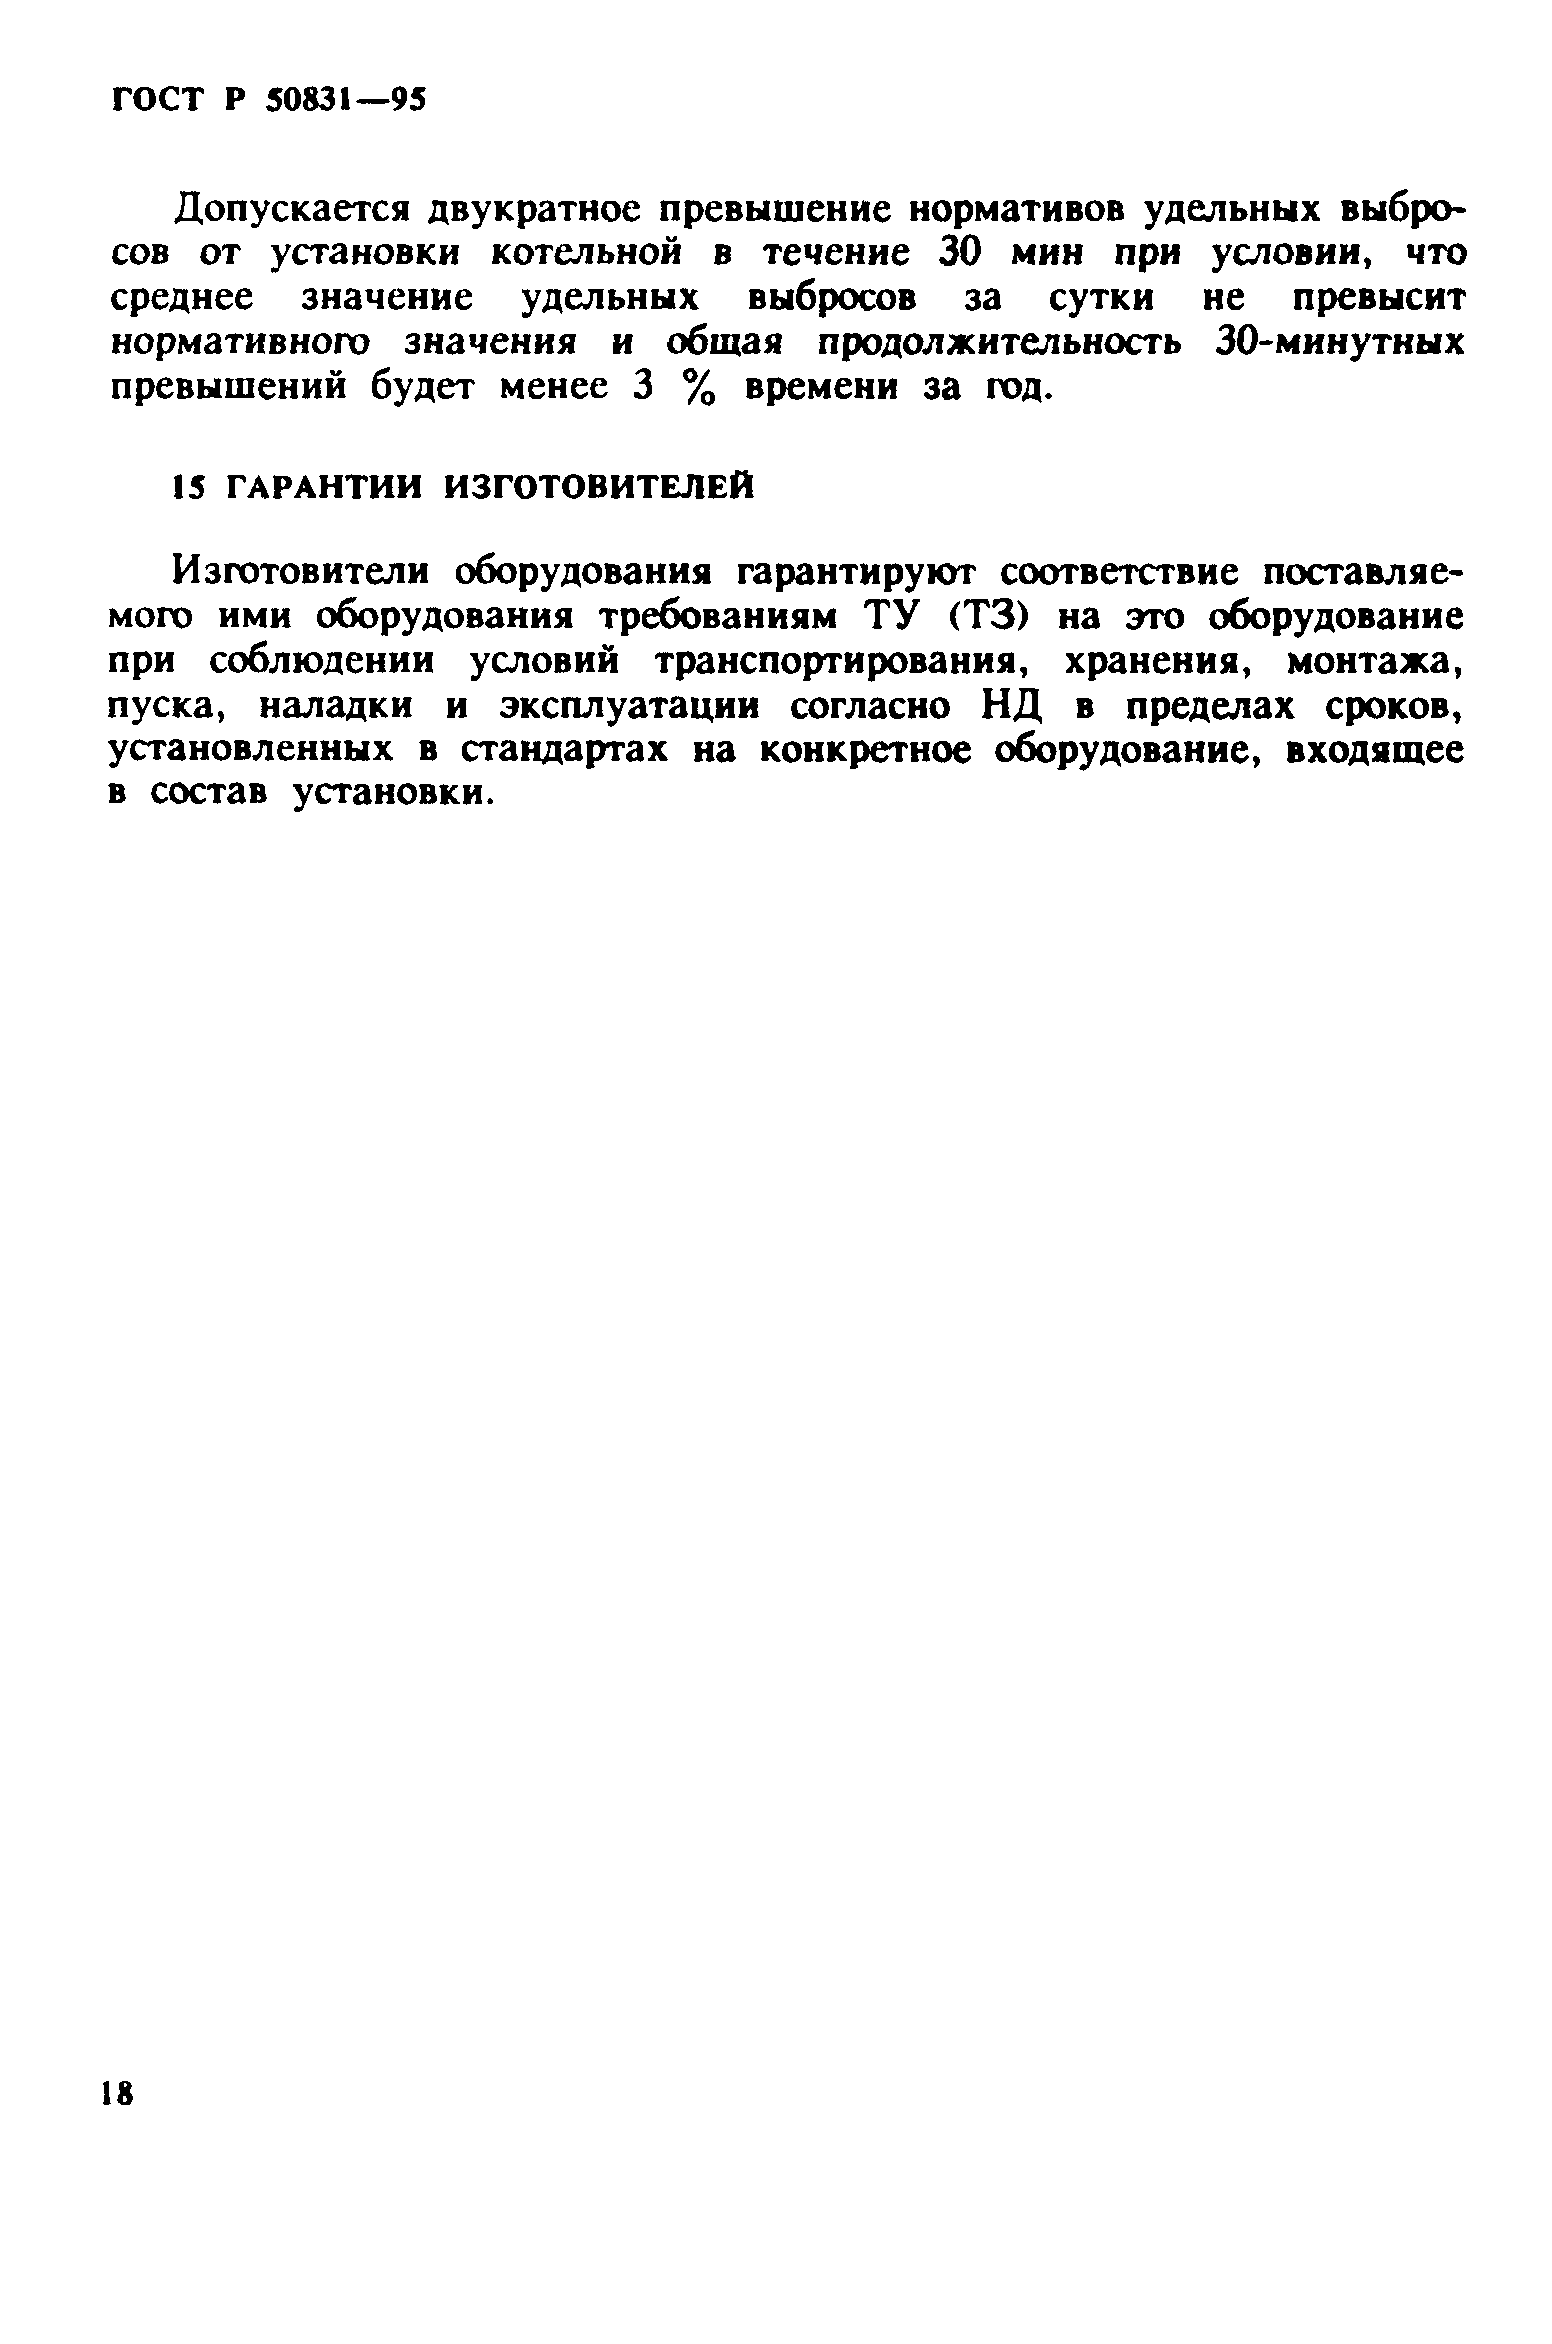 ГОСТ Р 50831-95